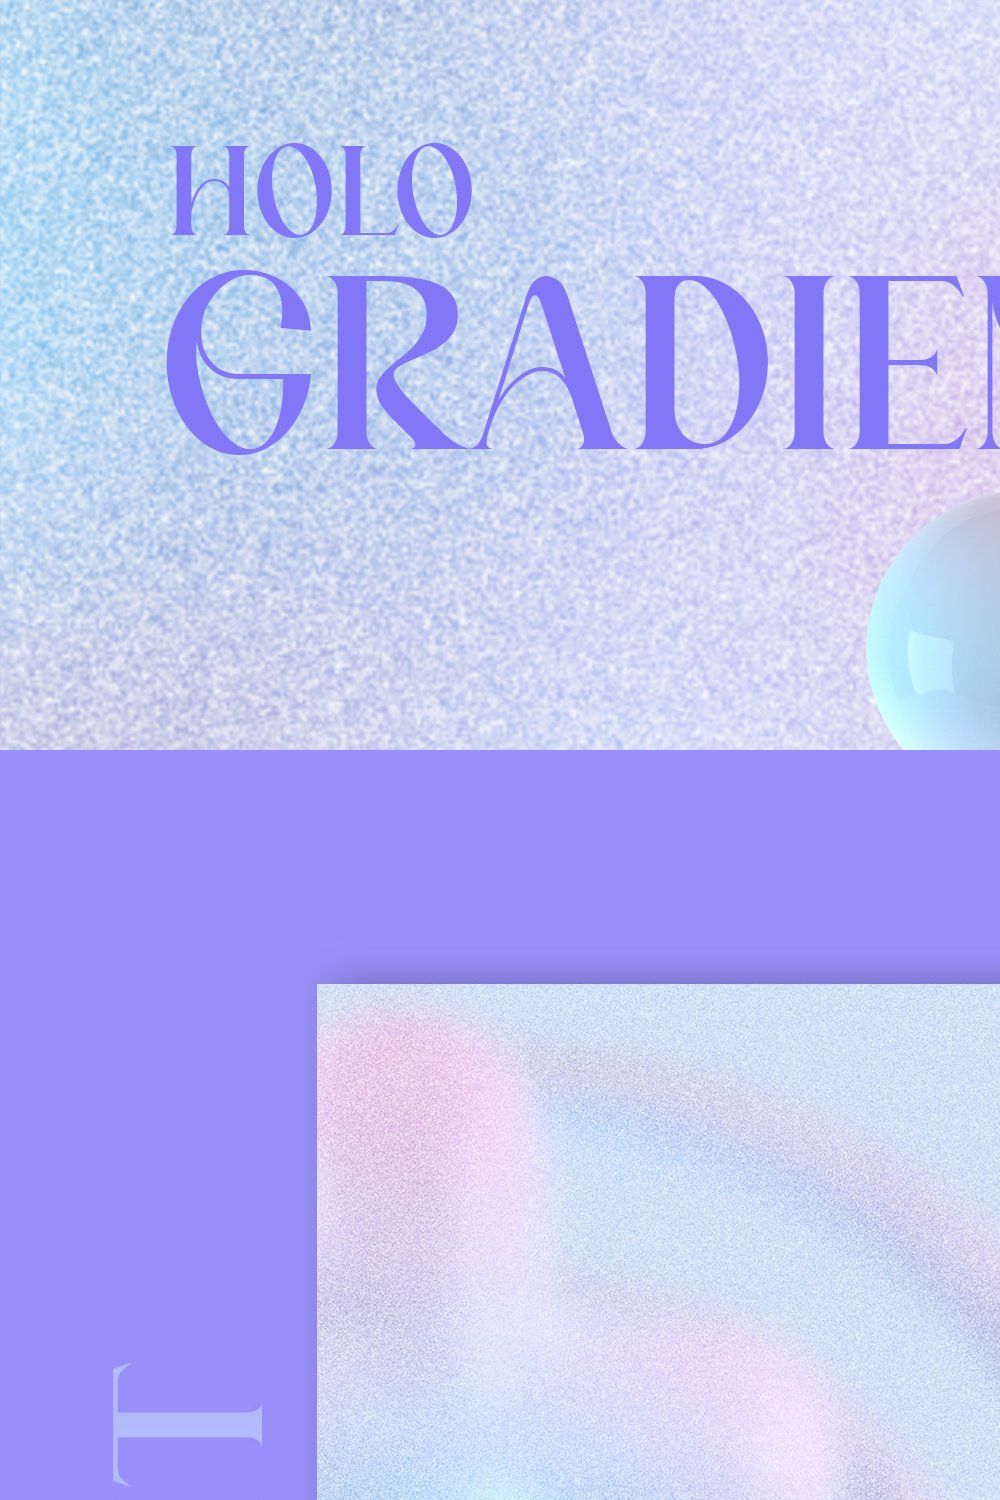 Holo Gradient. IPad Scene Creator. pinterest preview image.